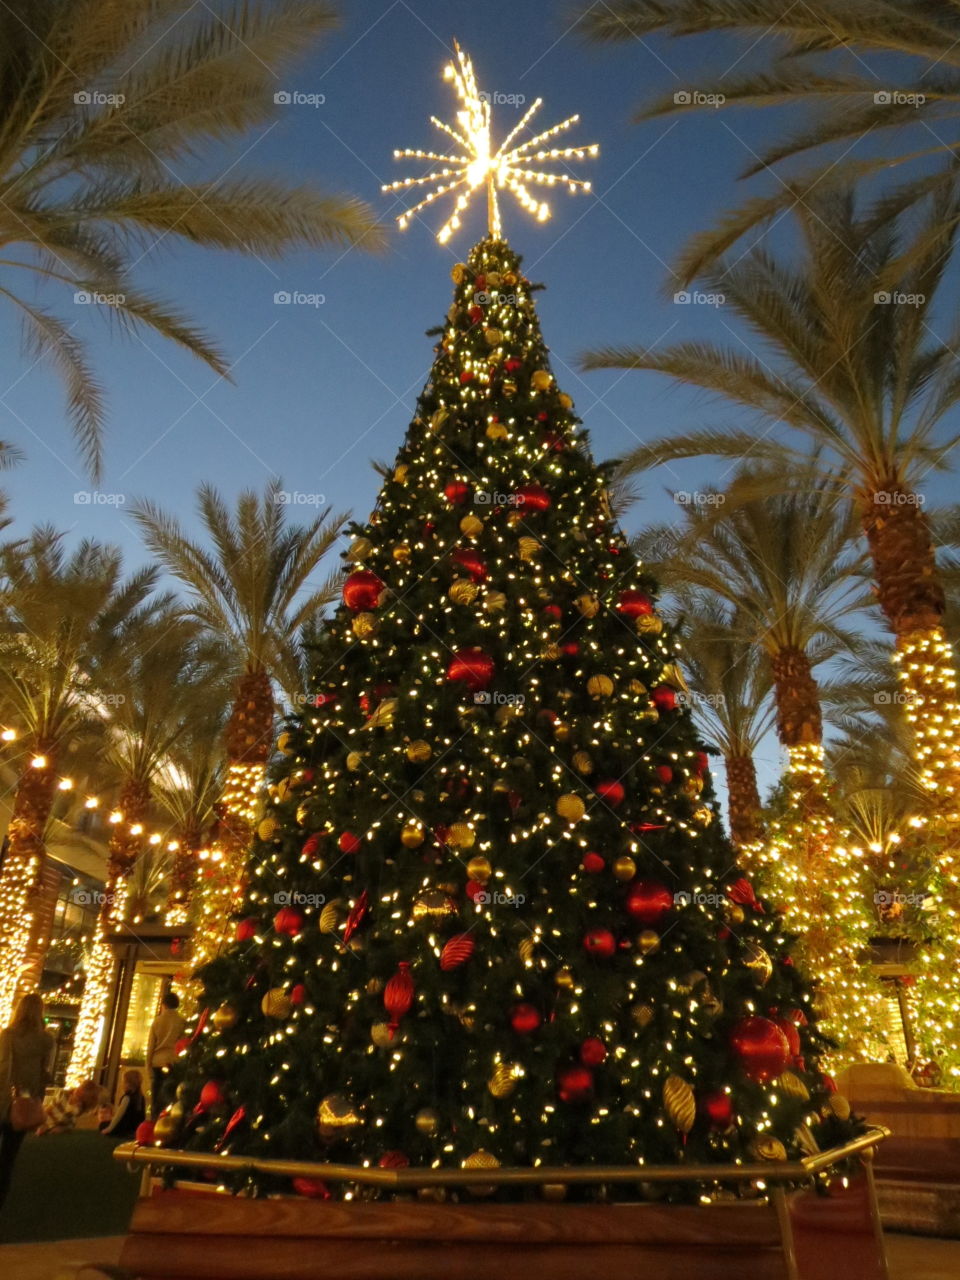 Beautiful Christmas lights and tree.